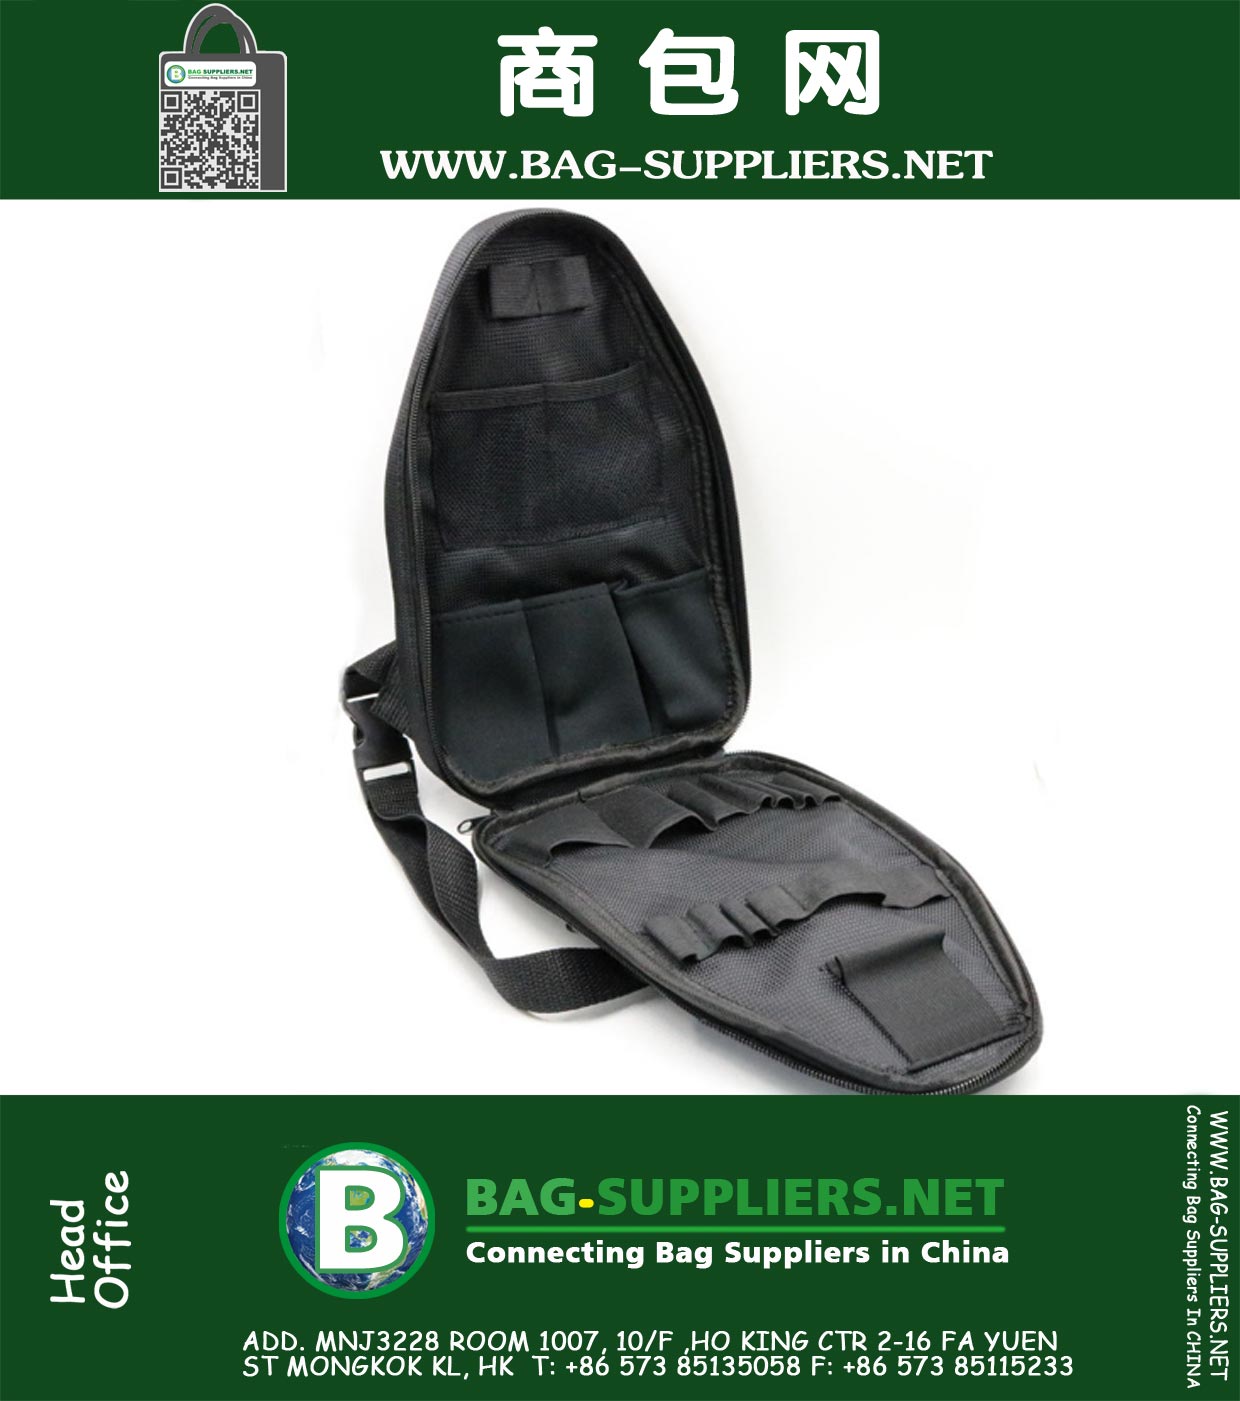 Zipper Carrying Case Double Deck Vape Pocket